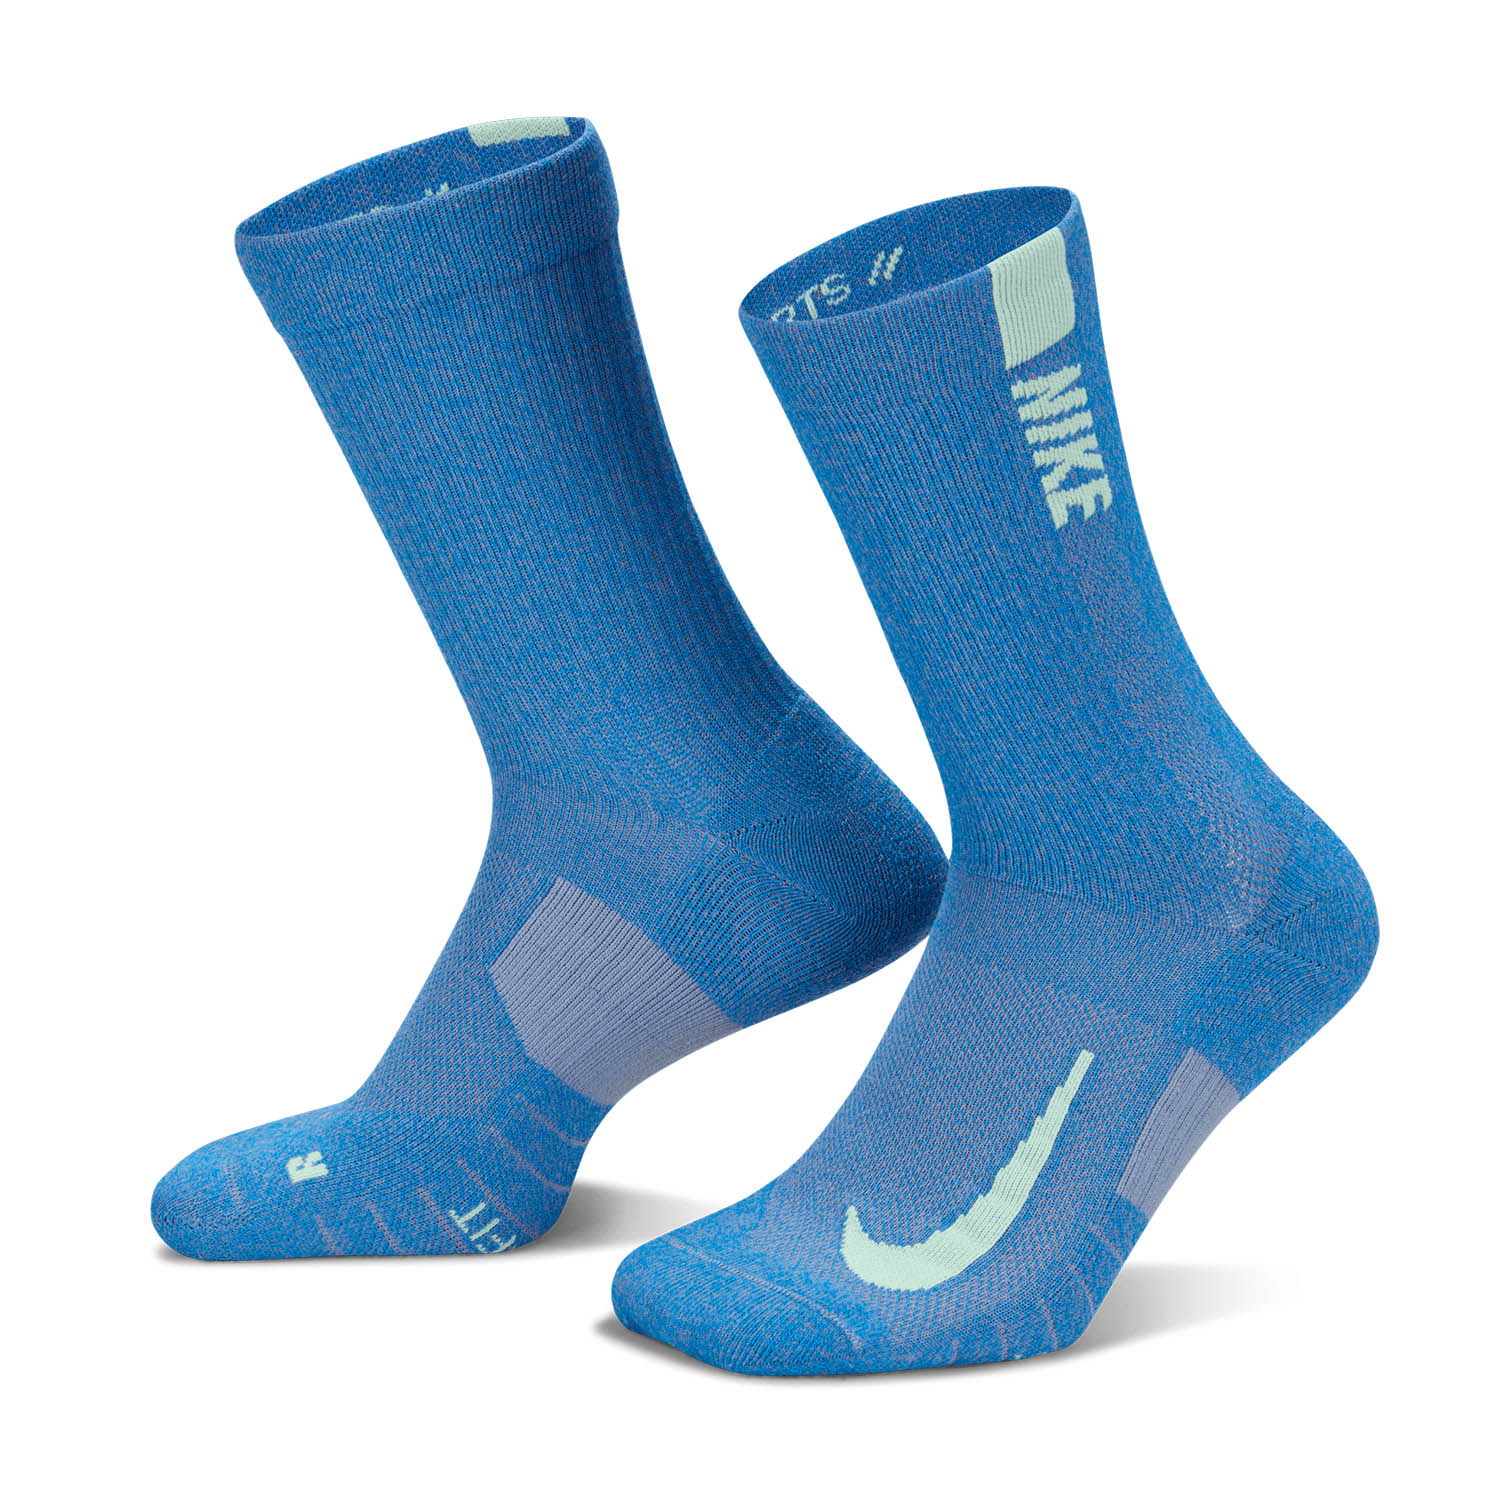 Nike Dri-FIT Multiplier Crew x 2 Running Socks - Light Blue